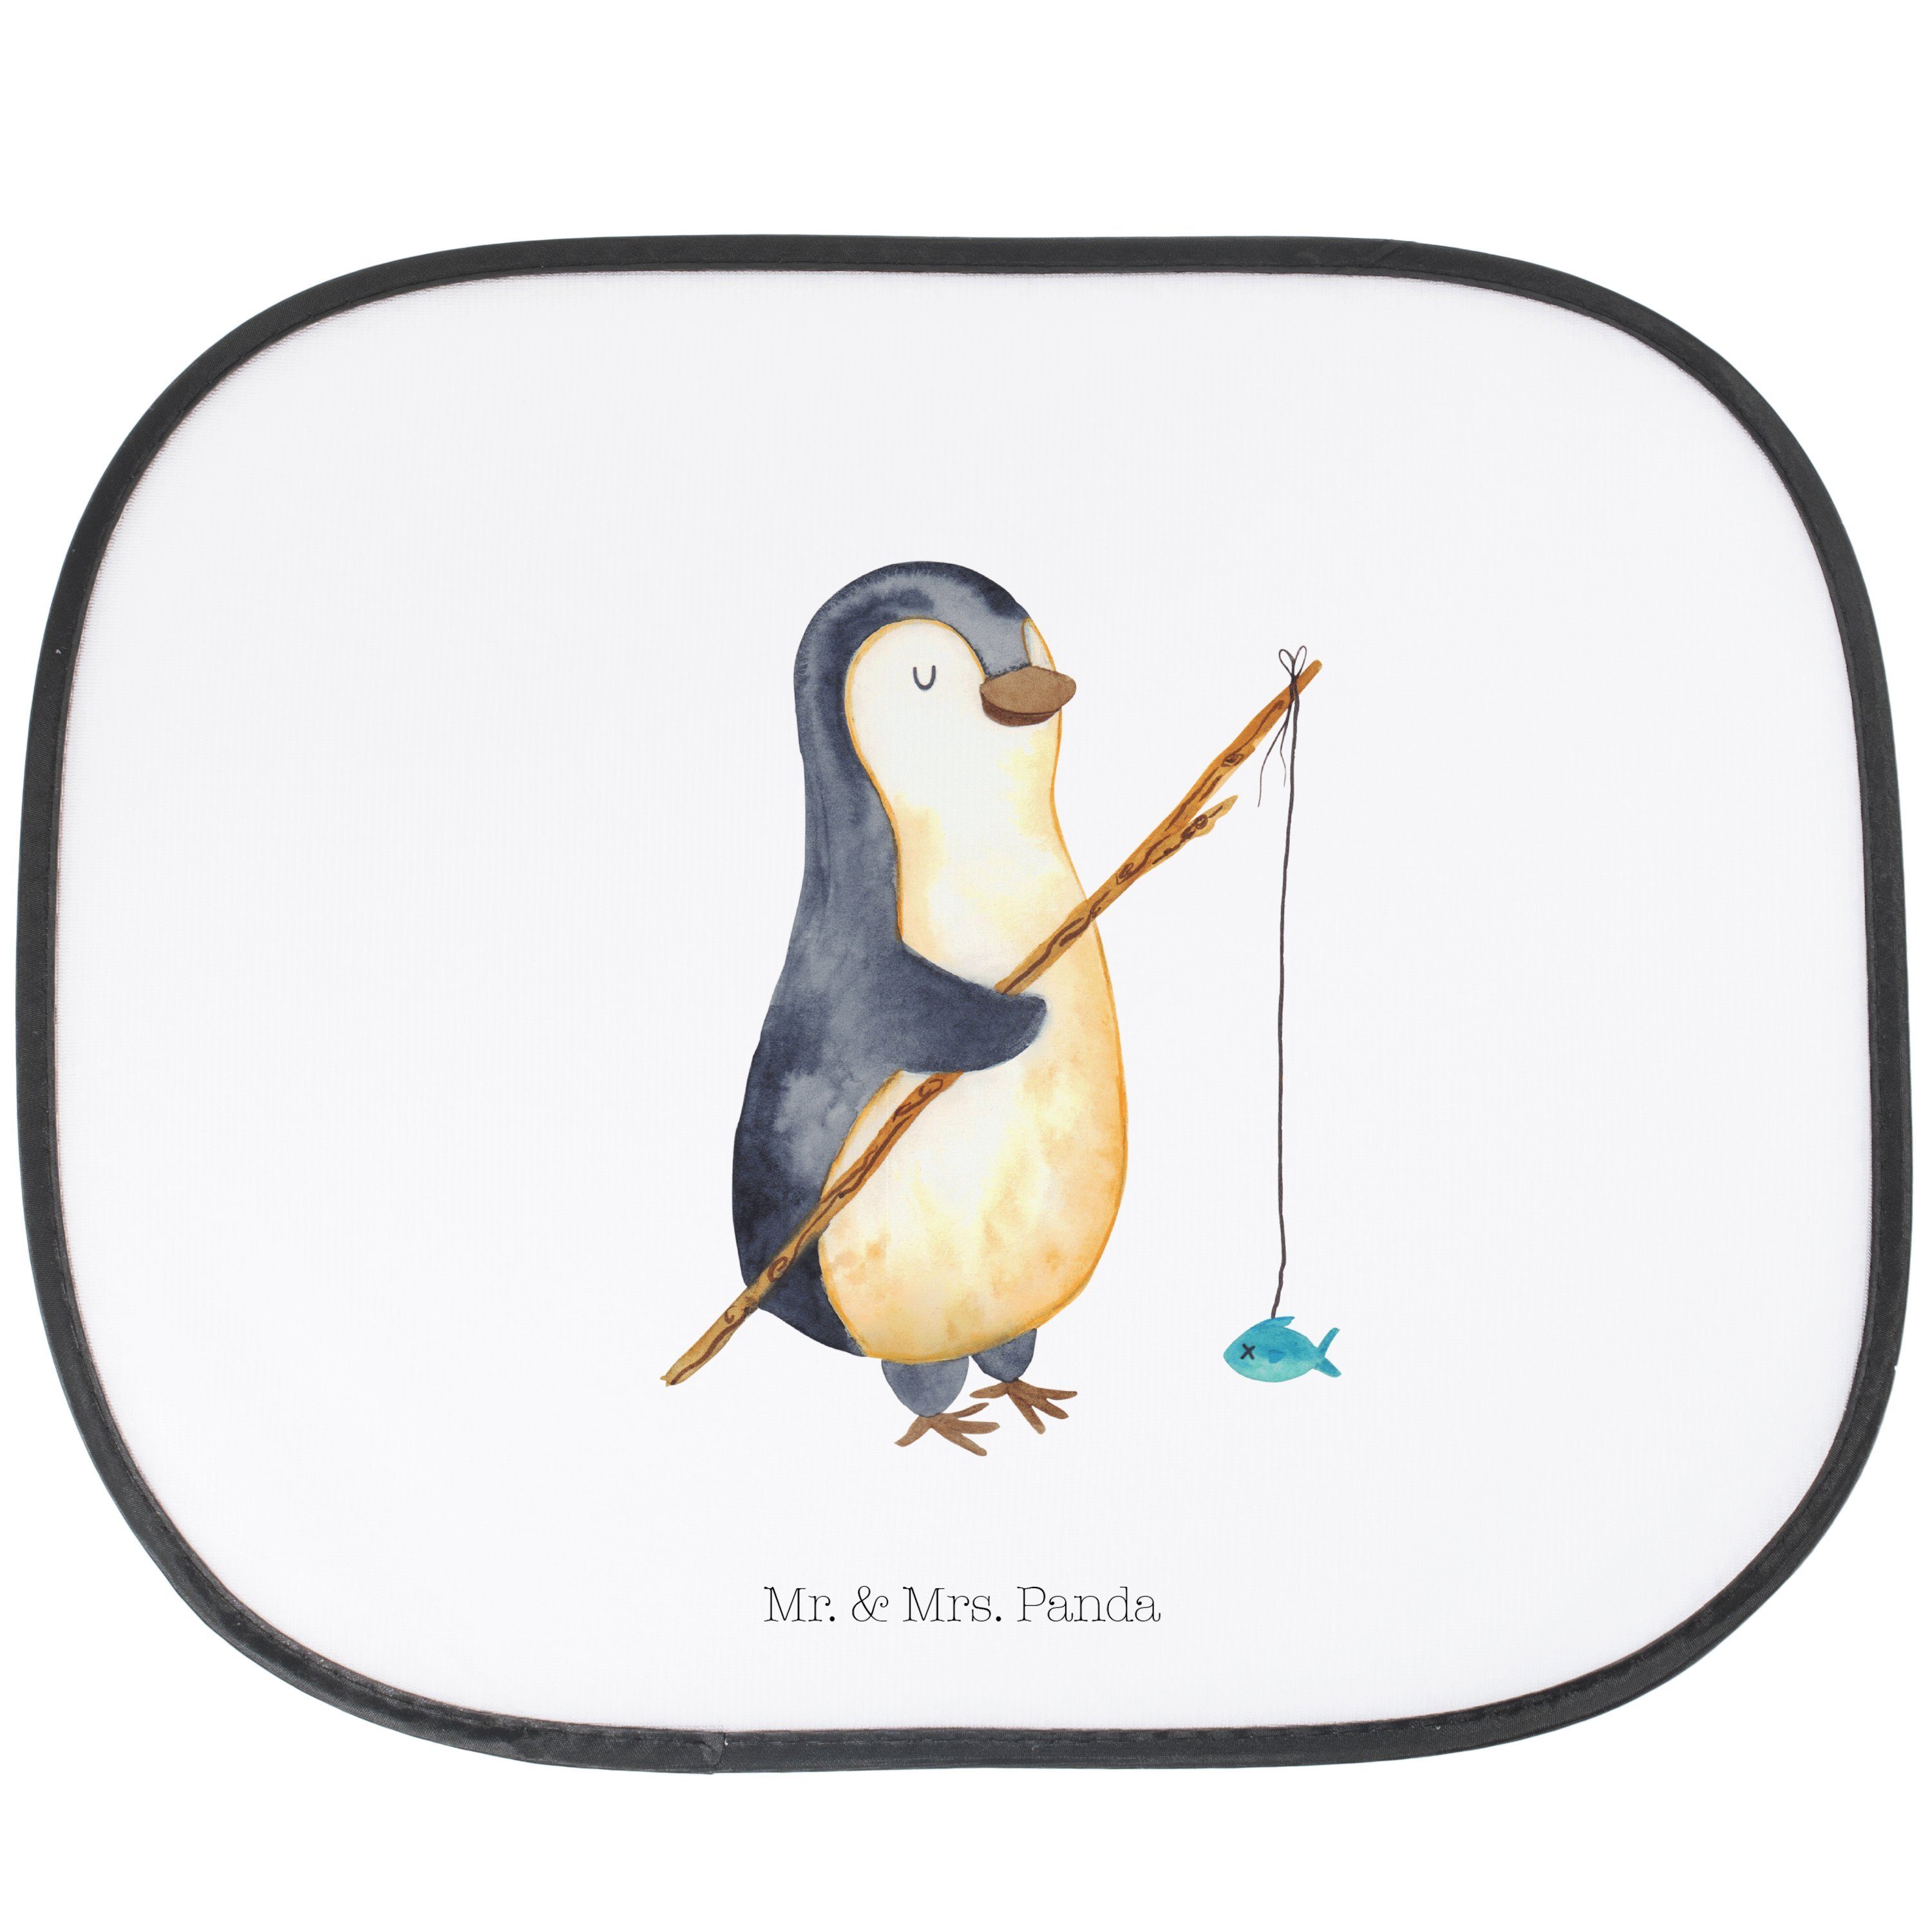 Sonnenschutz Pinguin Angler - Weiß - Geschenk, Fischer, Sonnenblende, Sonnenschutz, Mr. & Mrs. Panda, Seidenmatt